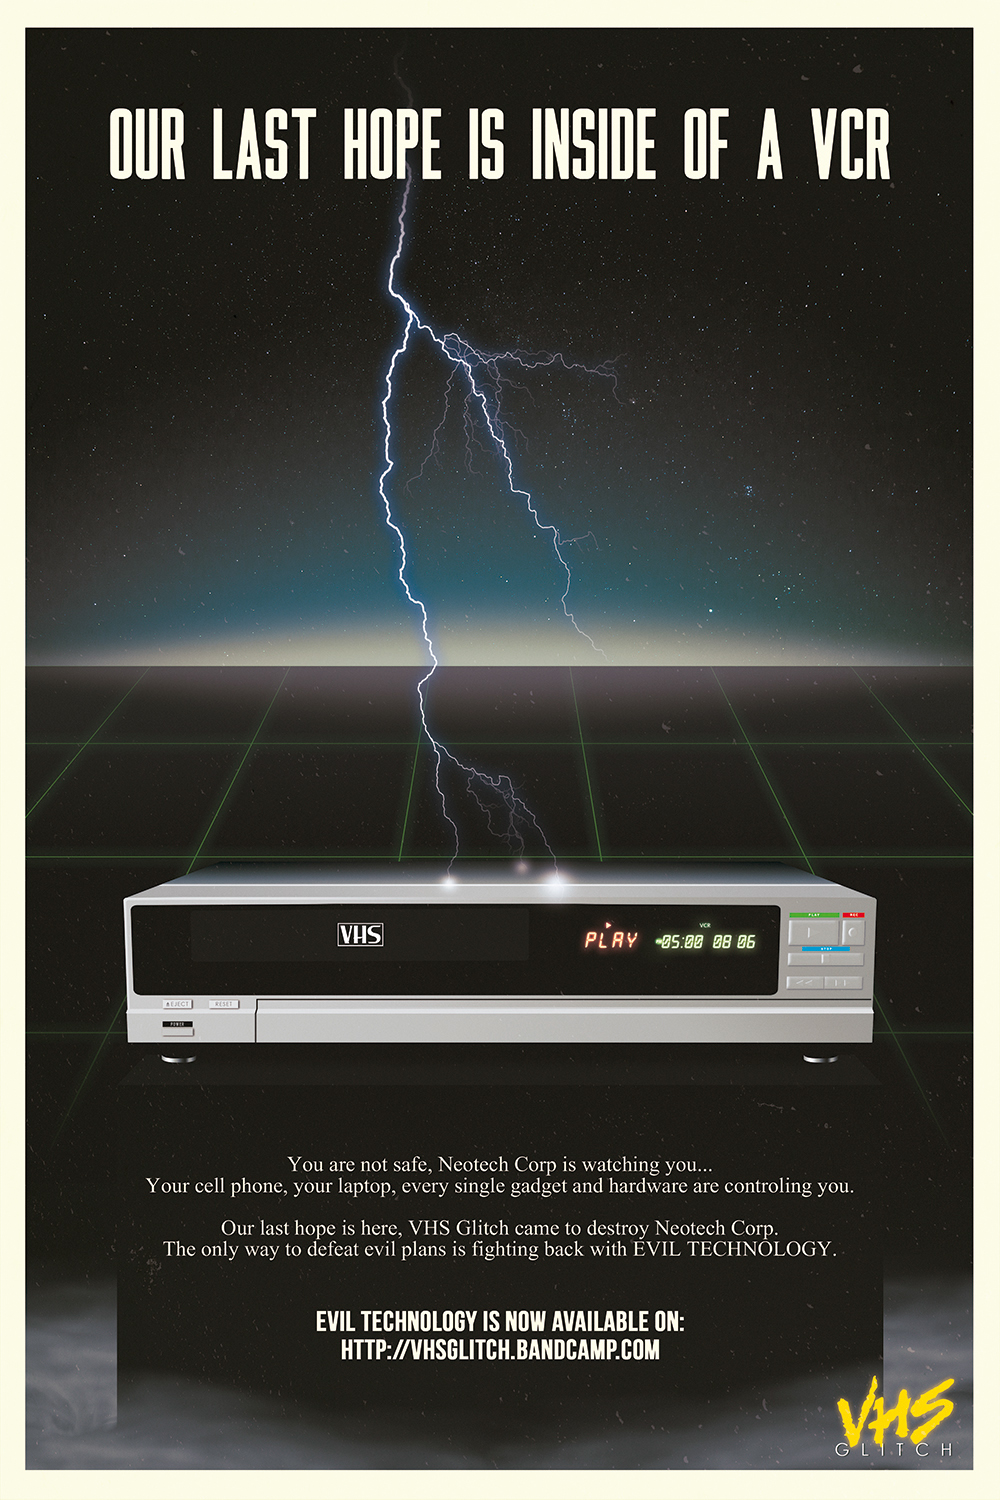 logo design retrofuturistic Retro futuristic vintage 80's eighties vhs Glitch Synthwave Cyberpunk videogame Pixel art